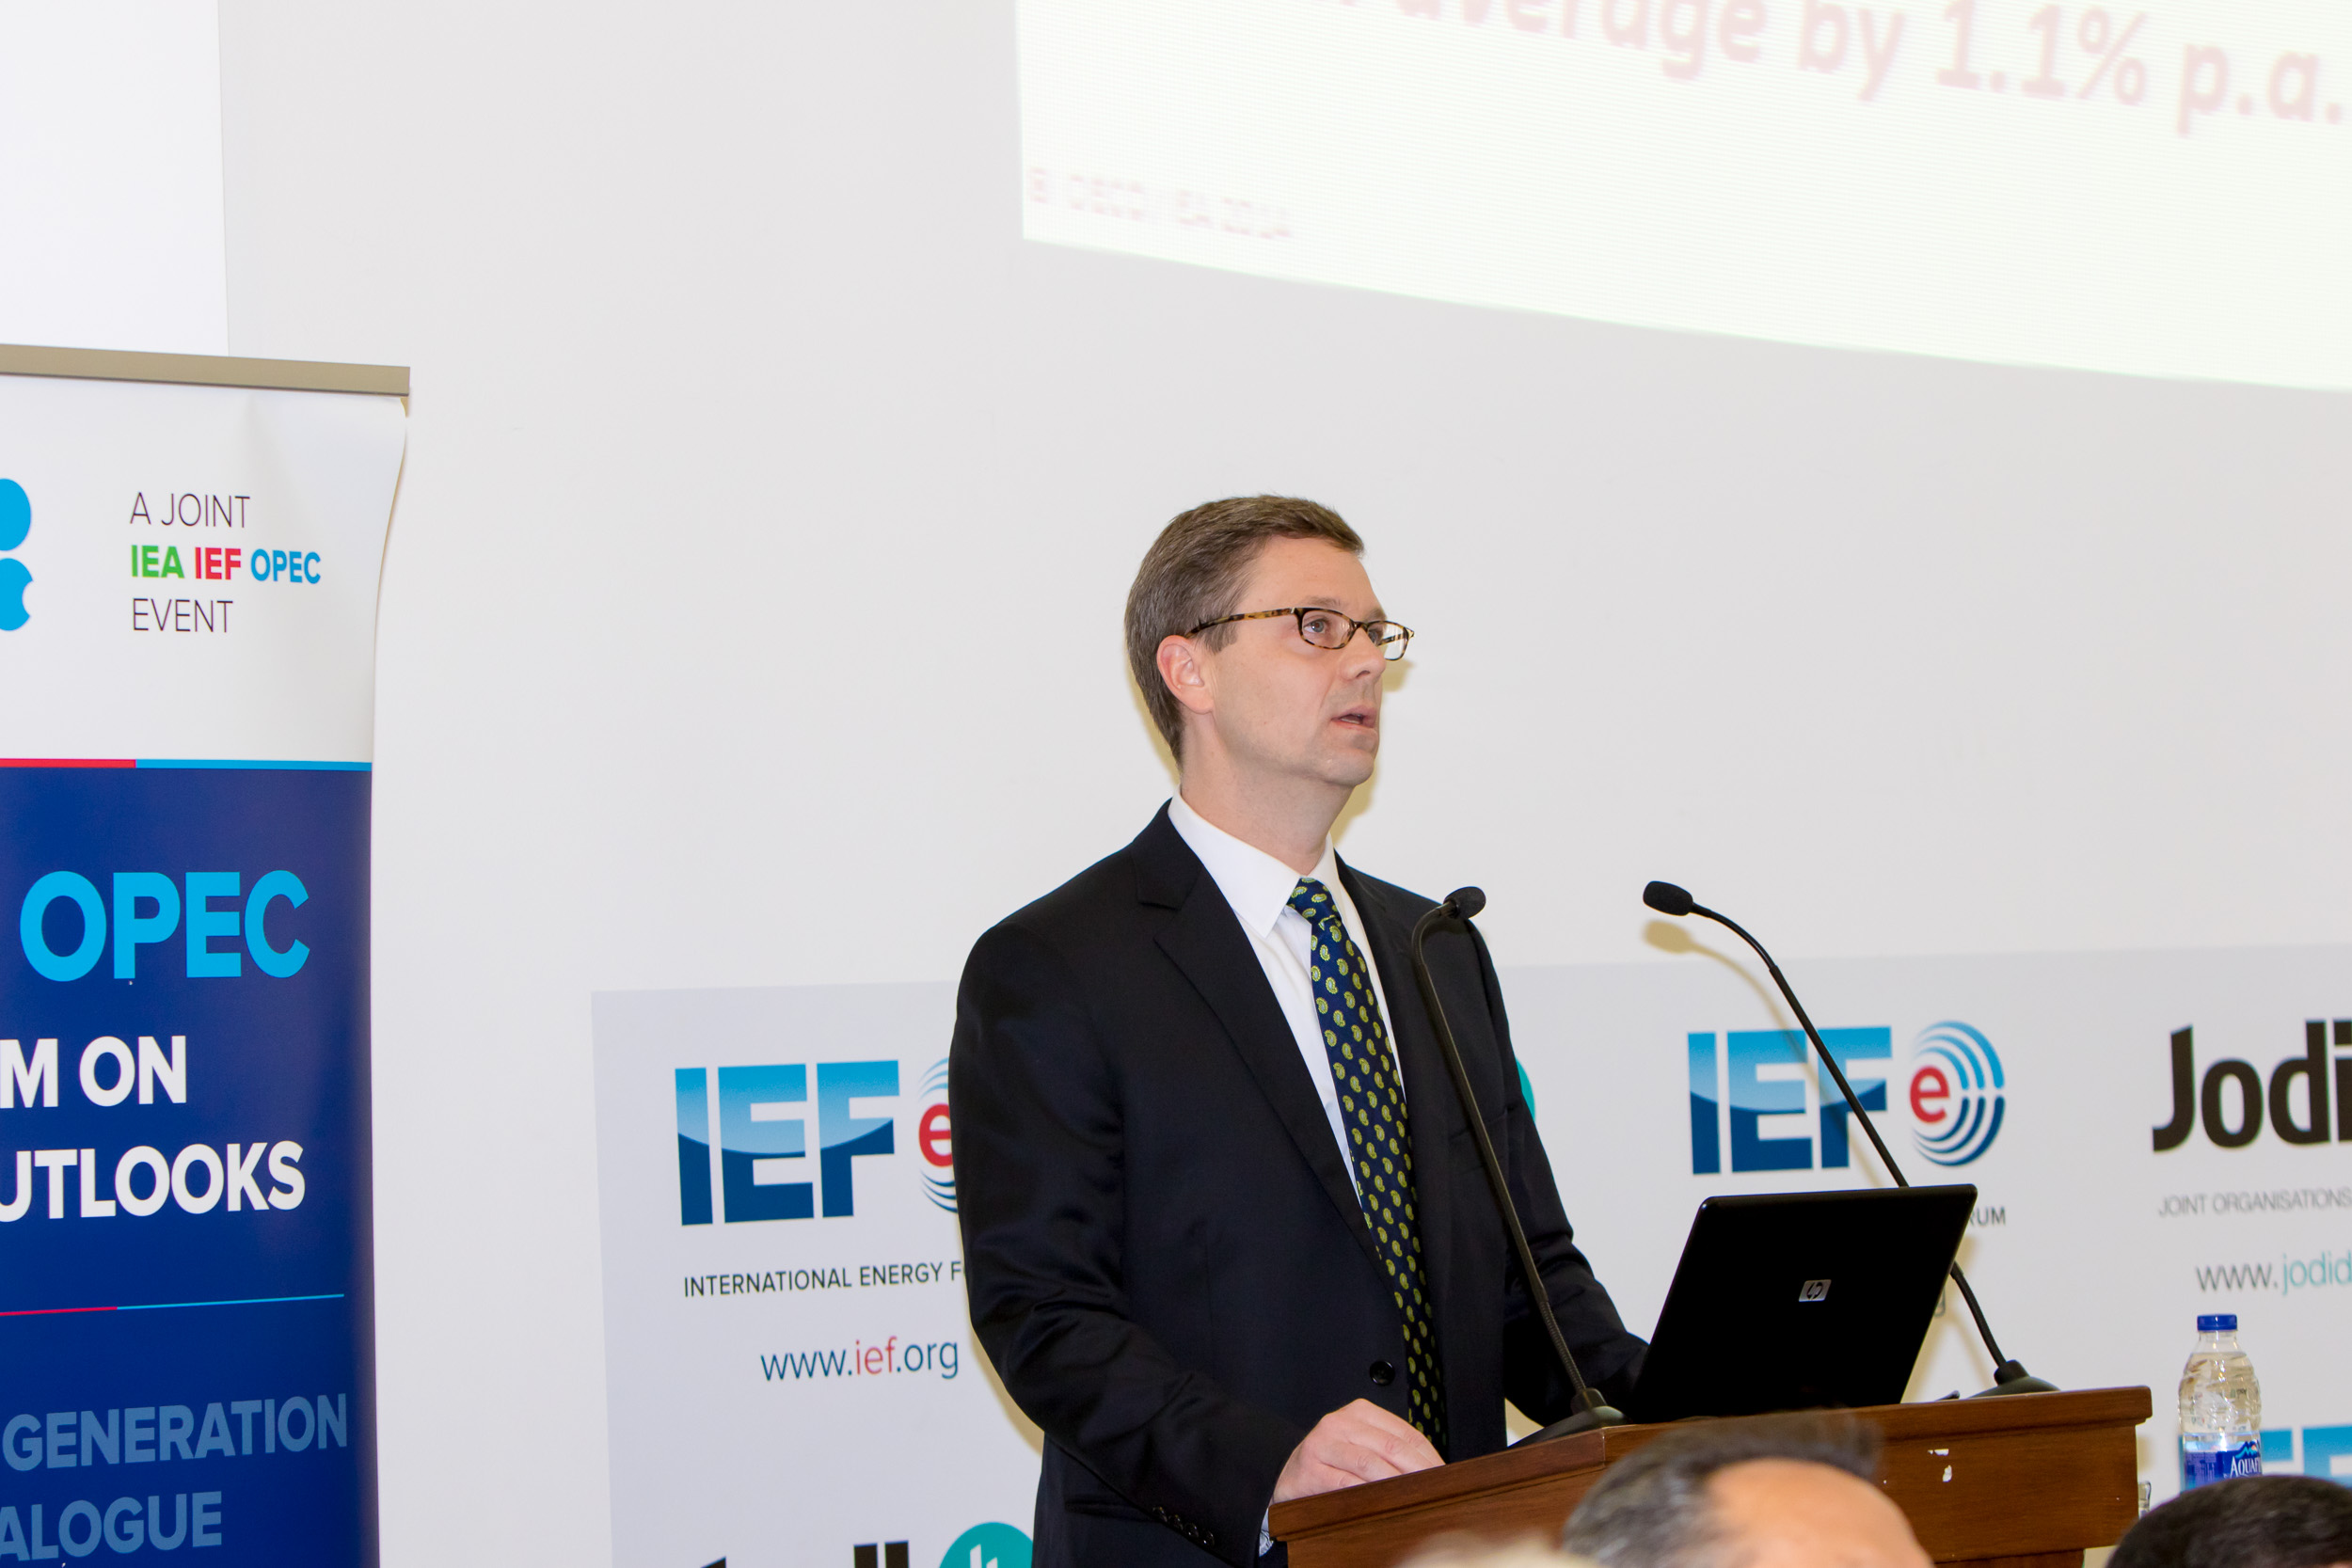 IEA IEF OPEC Symposium_21057